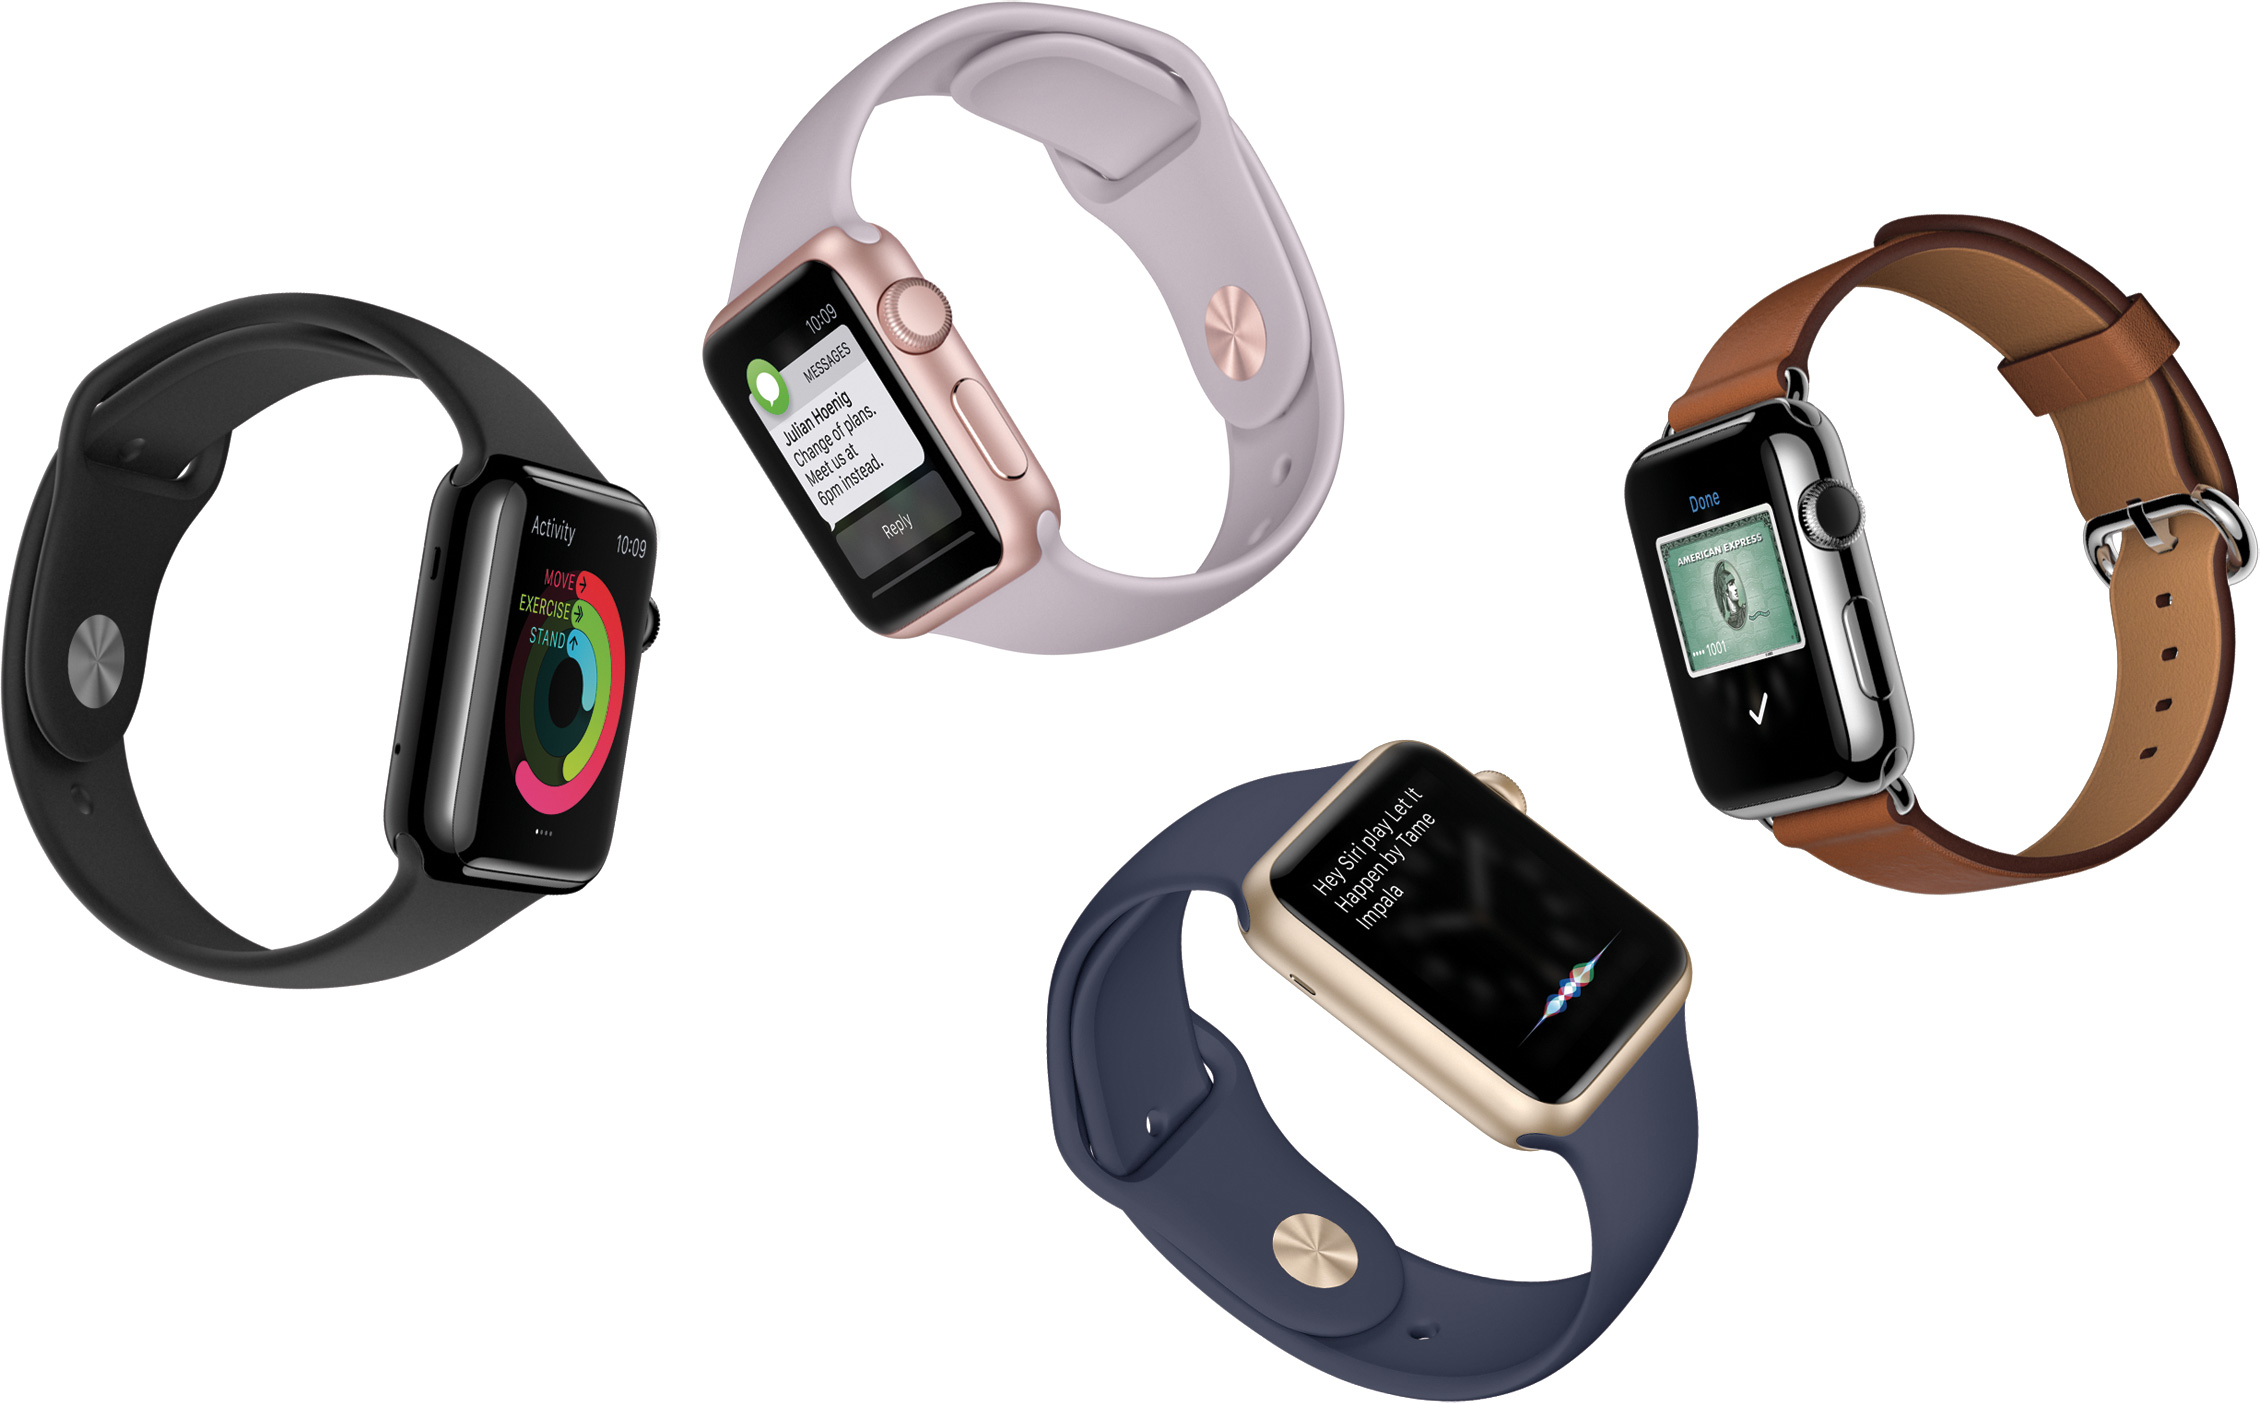 Vários modelos de Apple Watches